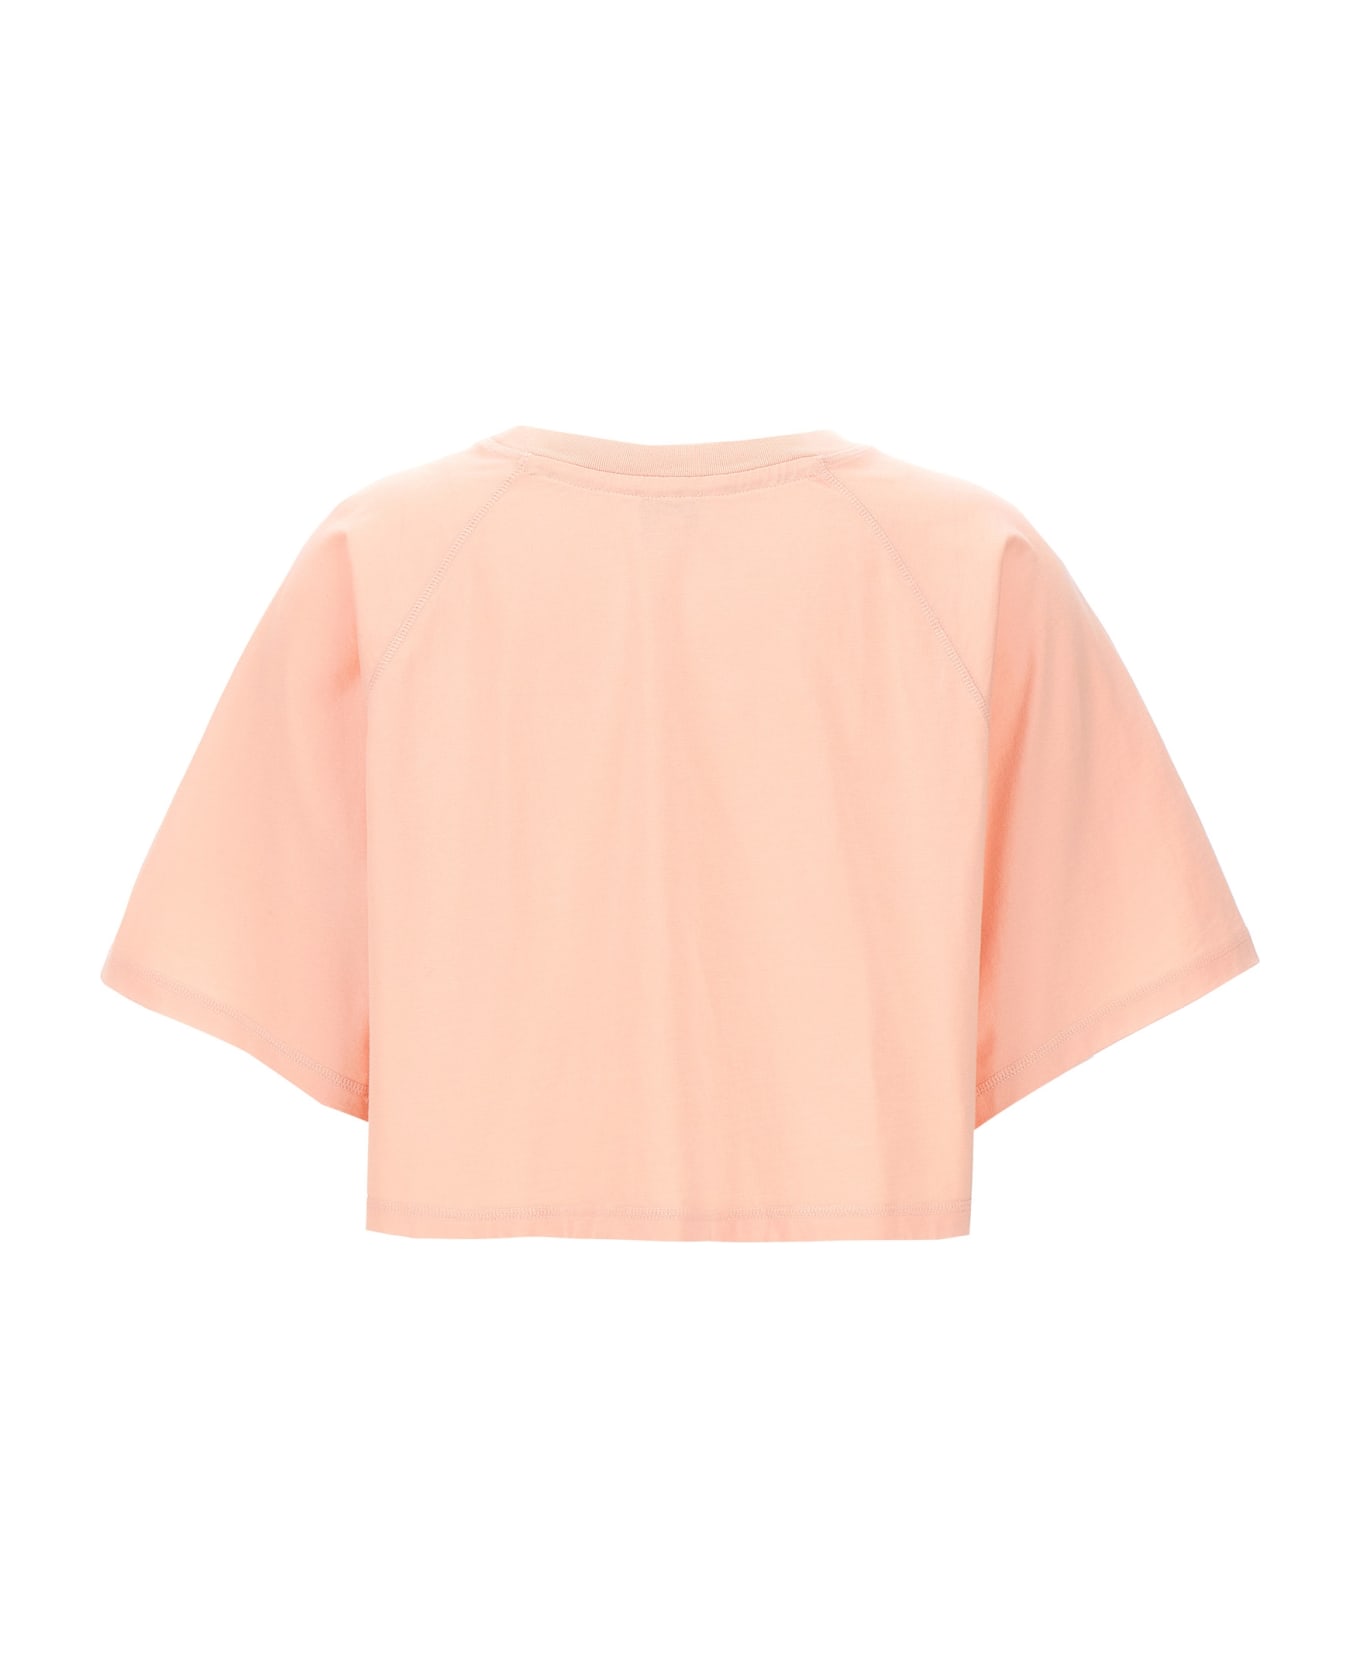 Kenzo Cropped T-shirt - Pink